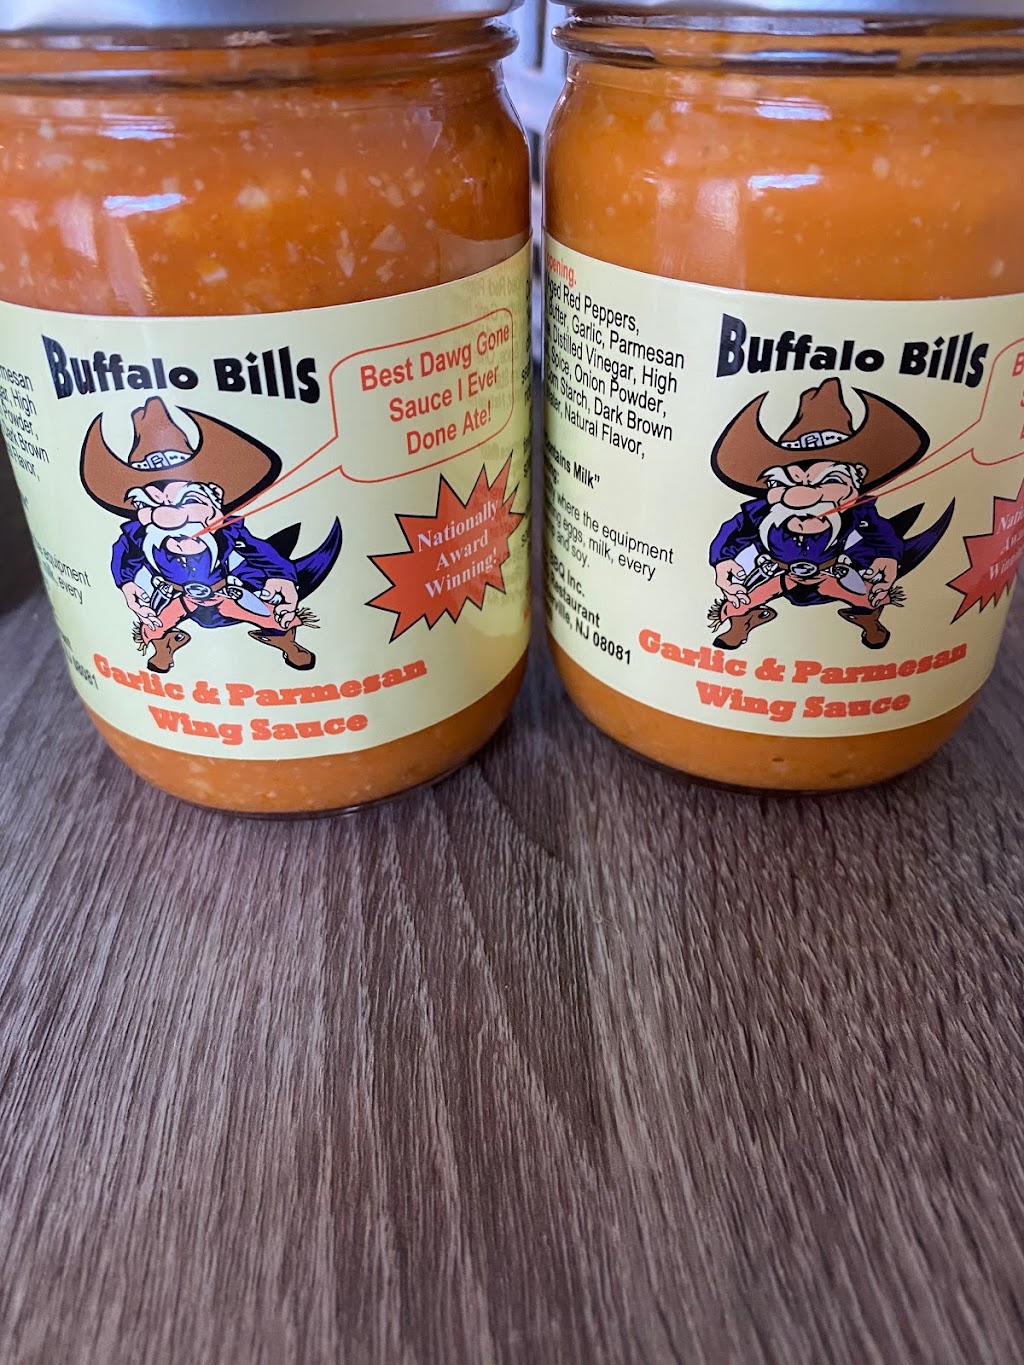 Buffalo Bills Barbecue | 416 Sicklerville Rd #9, Sicklerville, NJ 08081 | Phone: (856) 875-6000